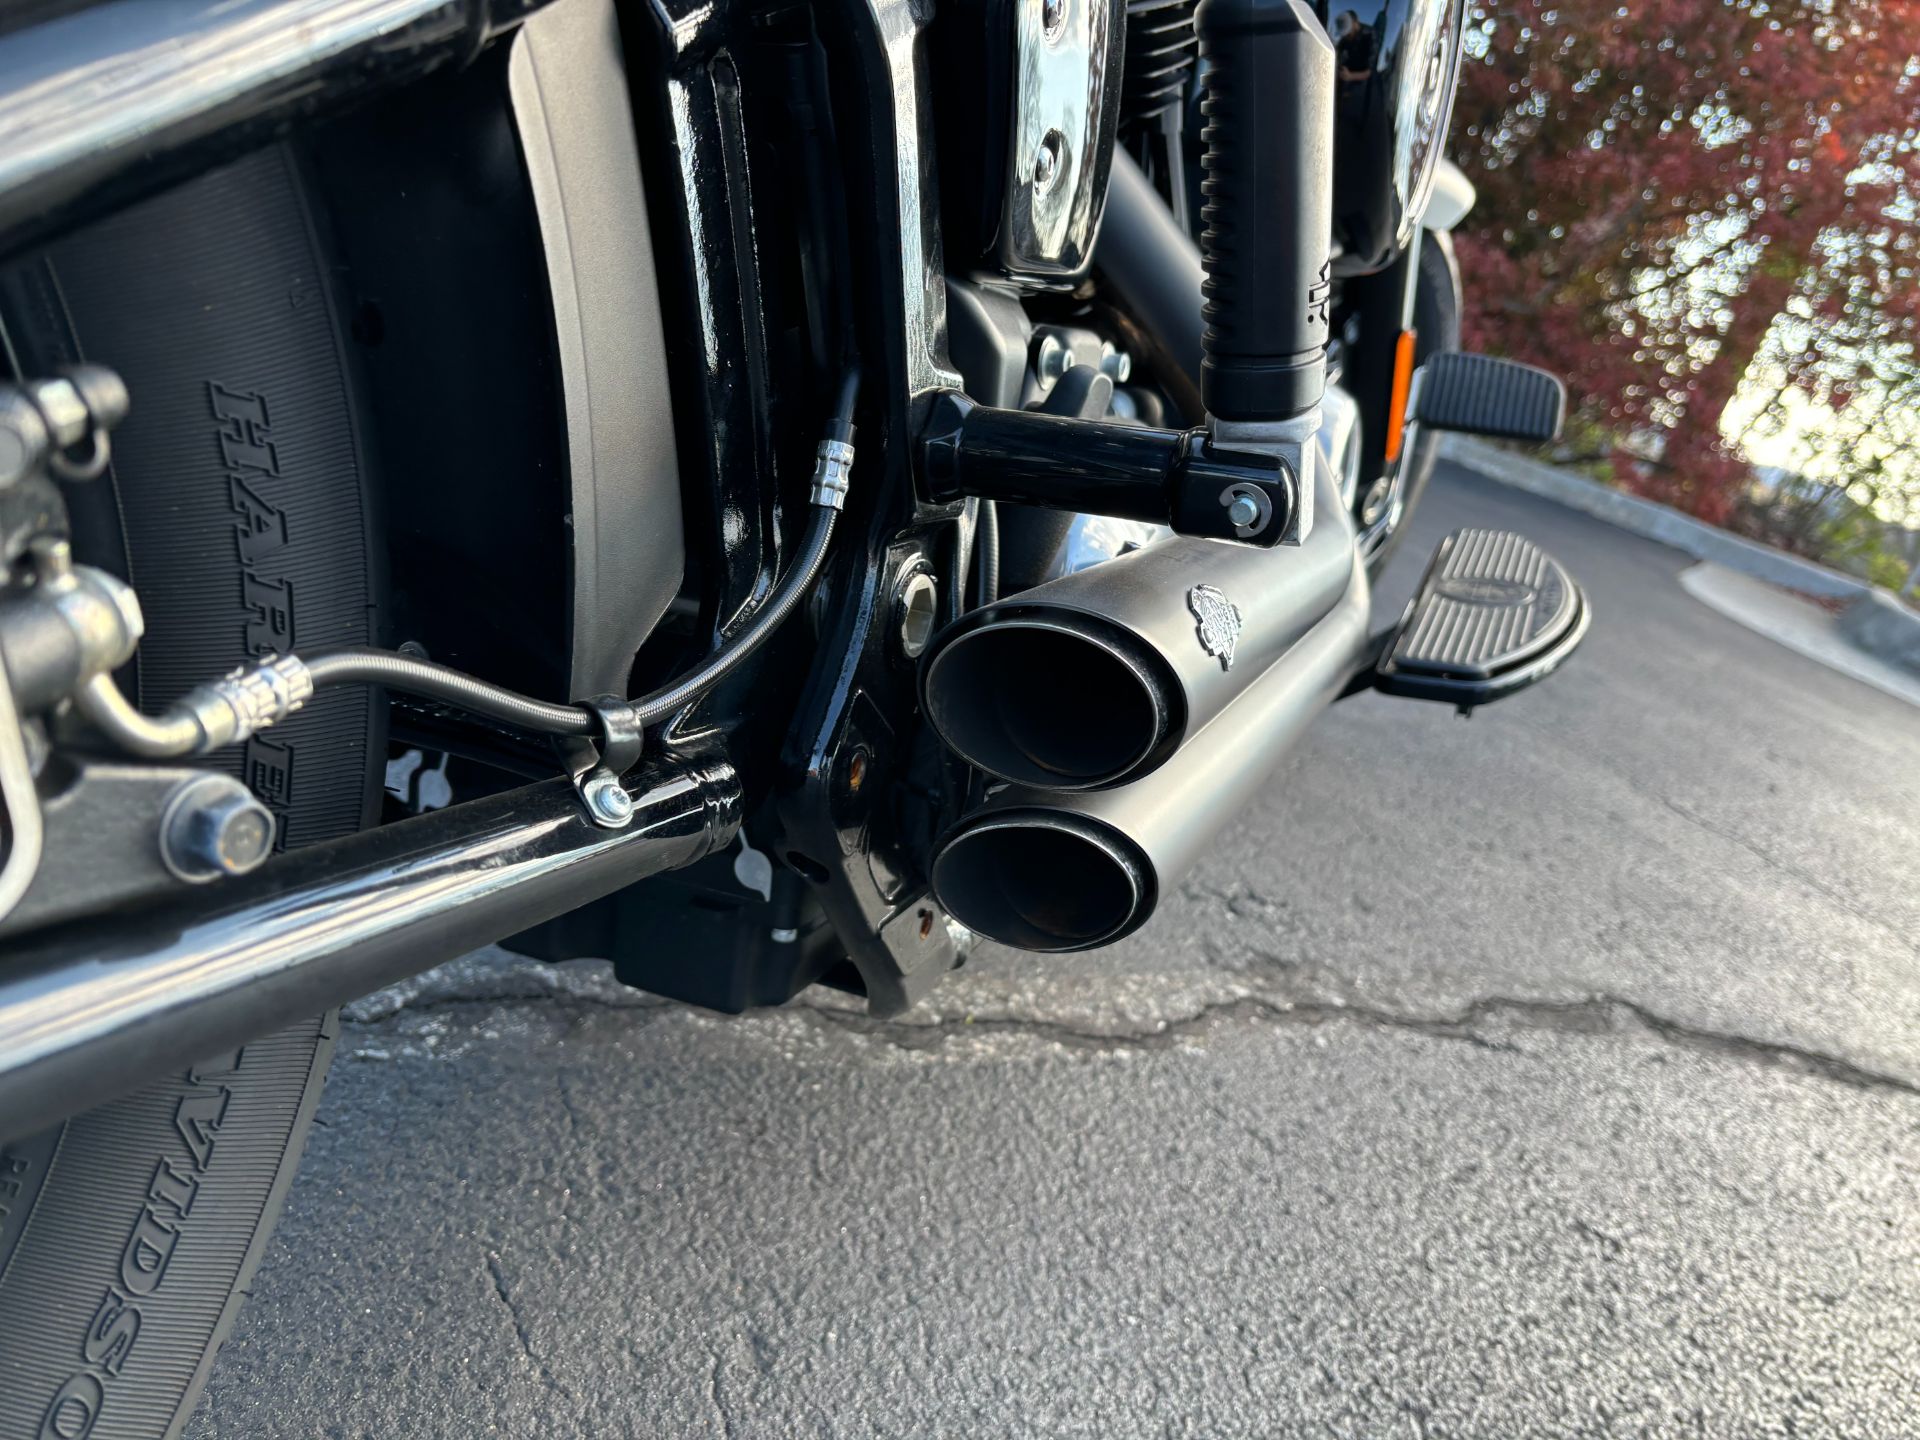 2020 Harley-Davidson Softail Slim® in Lynchburg, Virginia - Photo 20